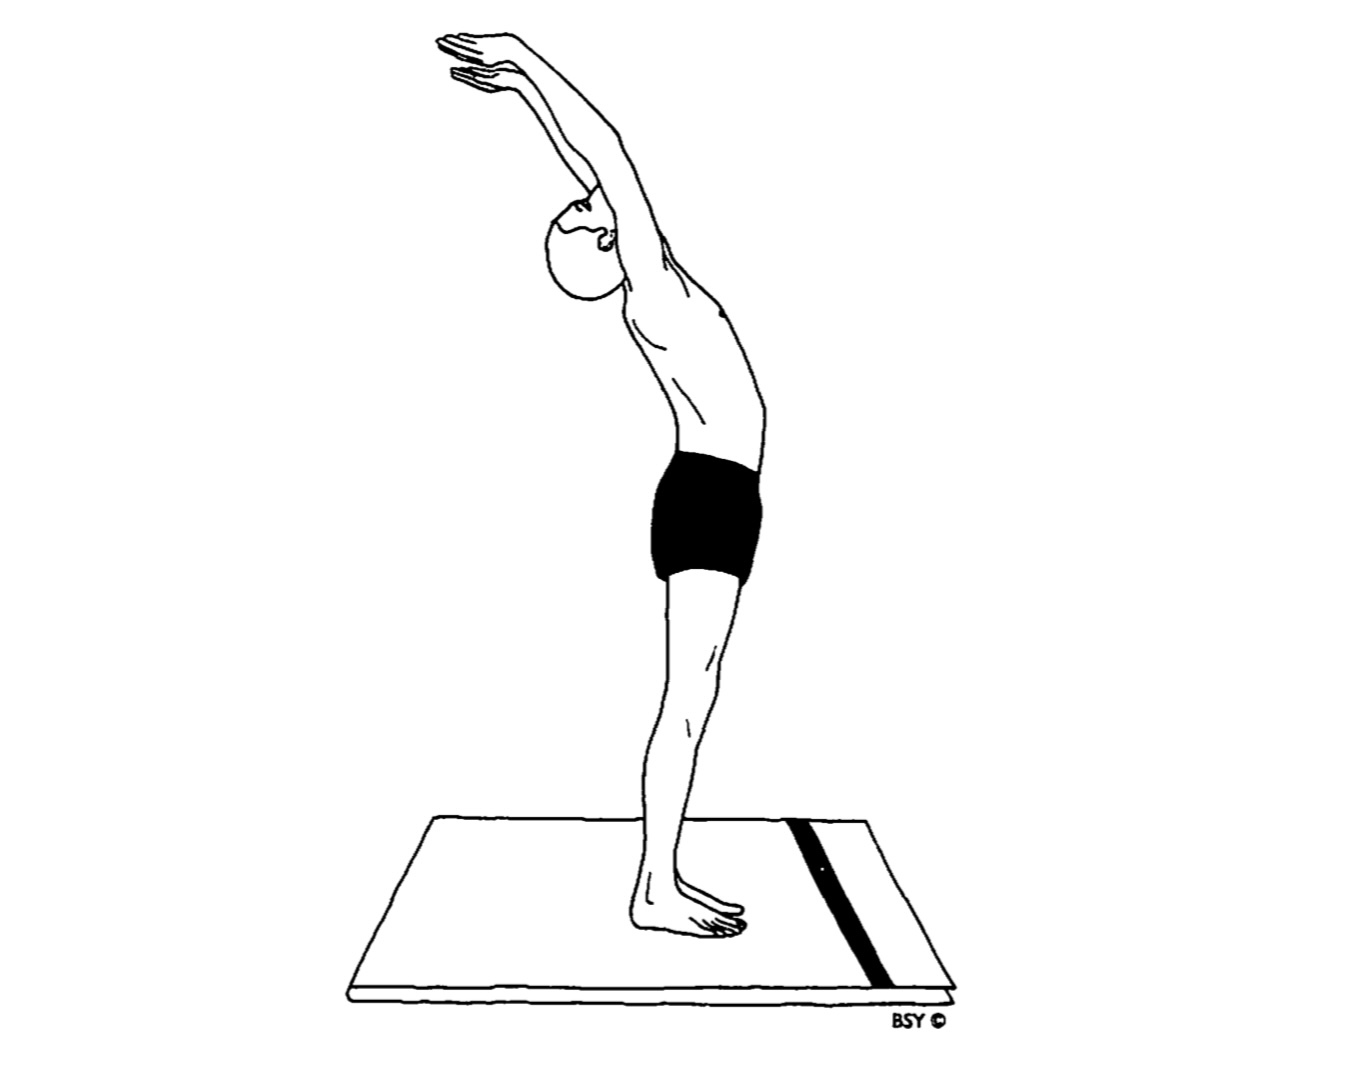 Sun Salutation Step 11 in yoga for obesity. The image shows the eleventh step in the Sun Salutation (Surya Namaskar) sequence.